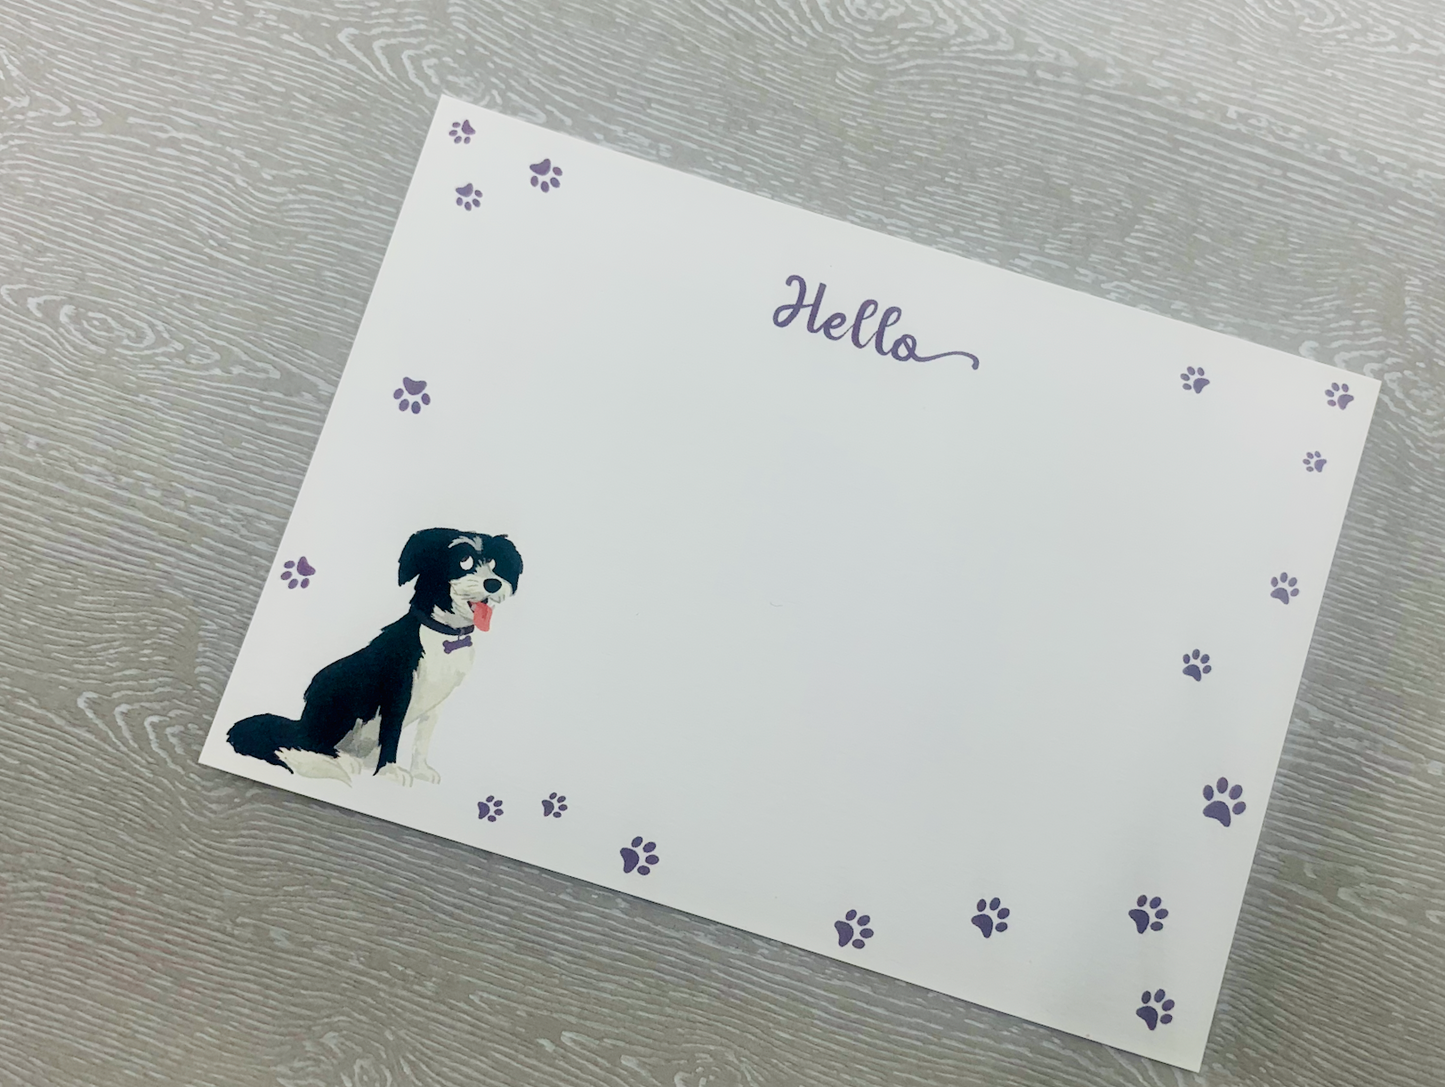 Adorable Dog Paws Notecard Sets